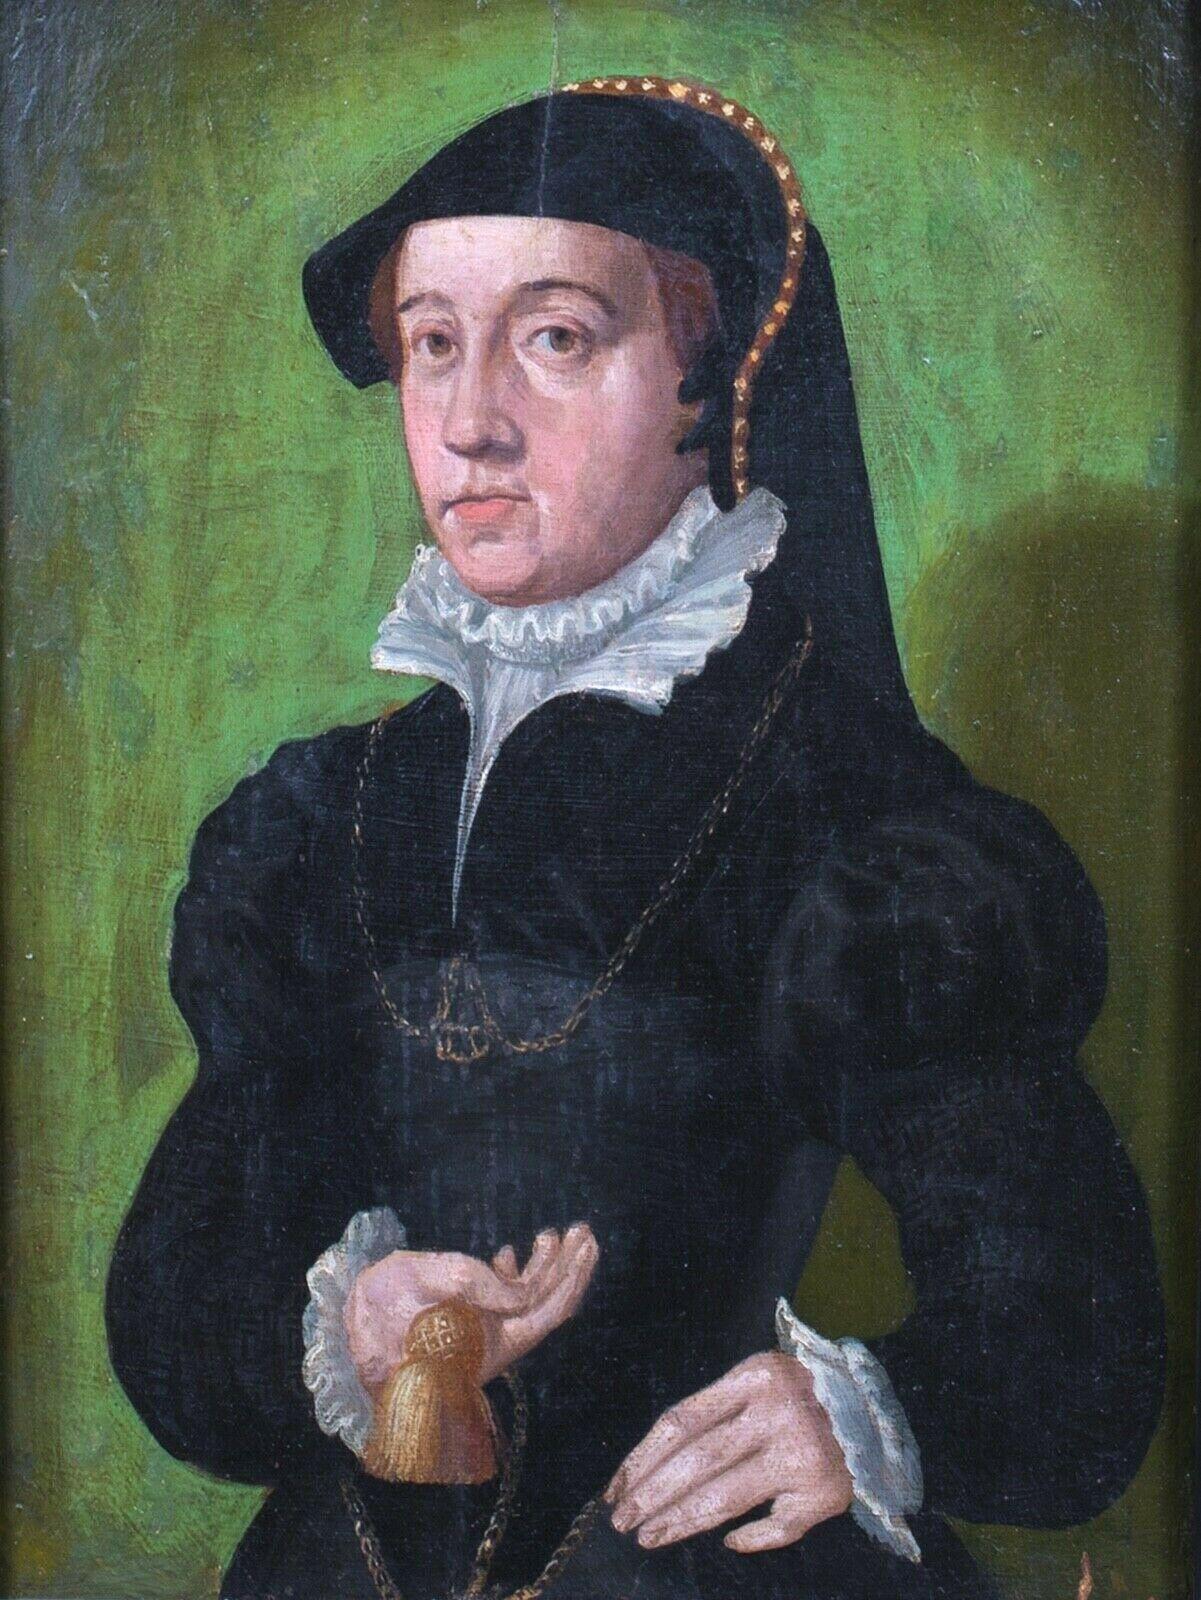 Unknown Portrait Painting - Portrait Of Jeanne III d'Albret (1528-1572), 16th Century